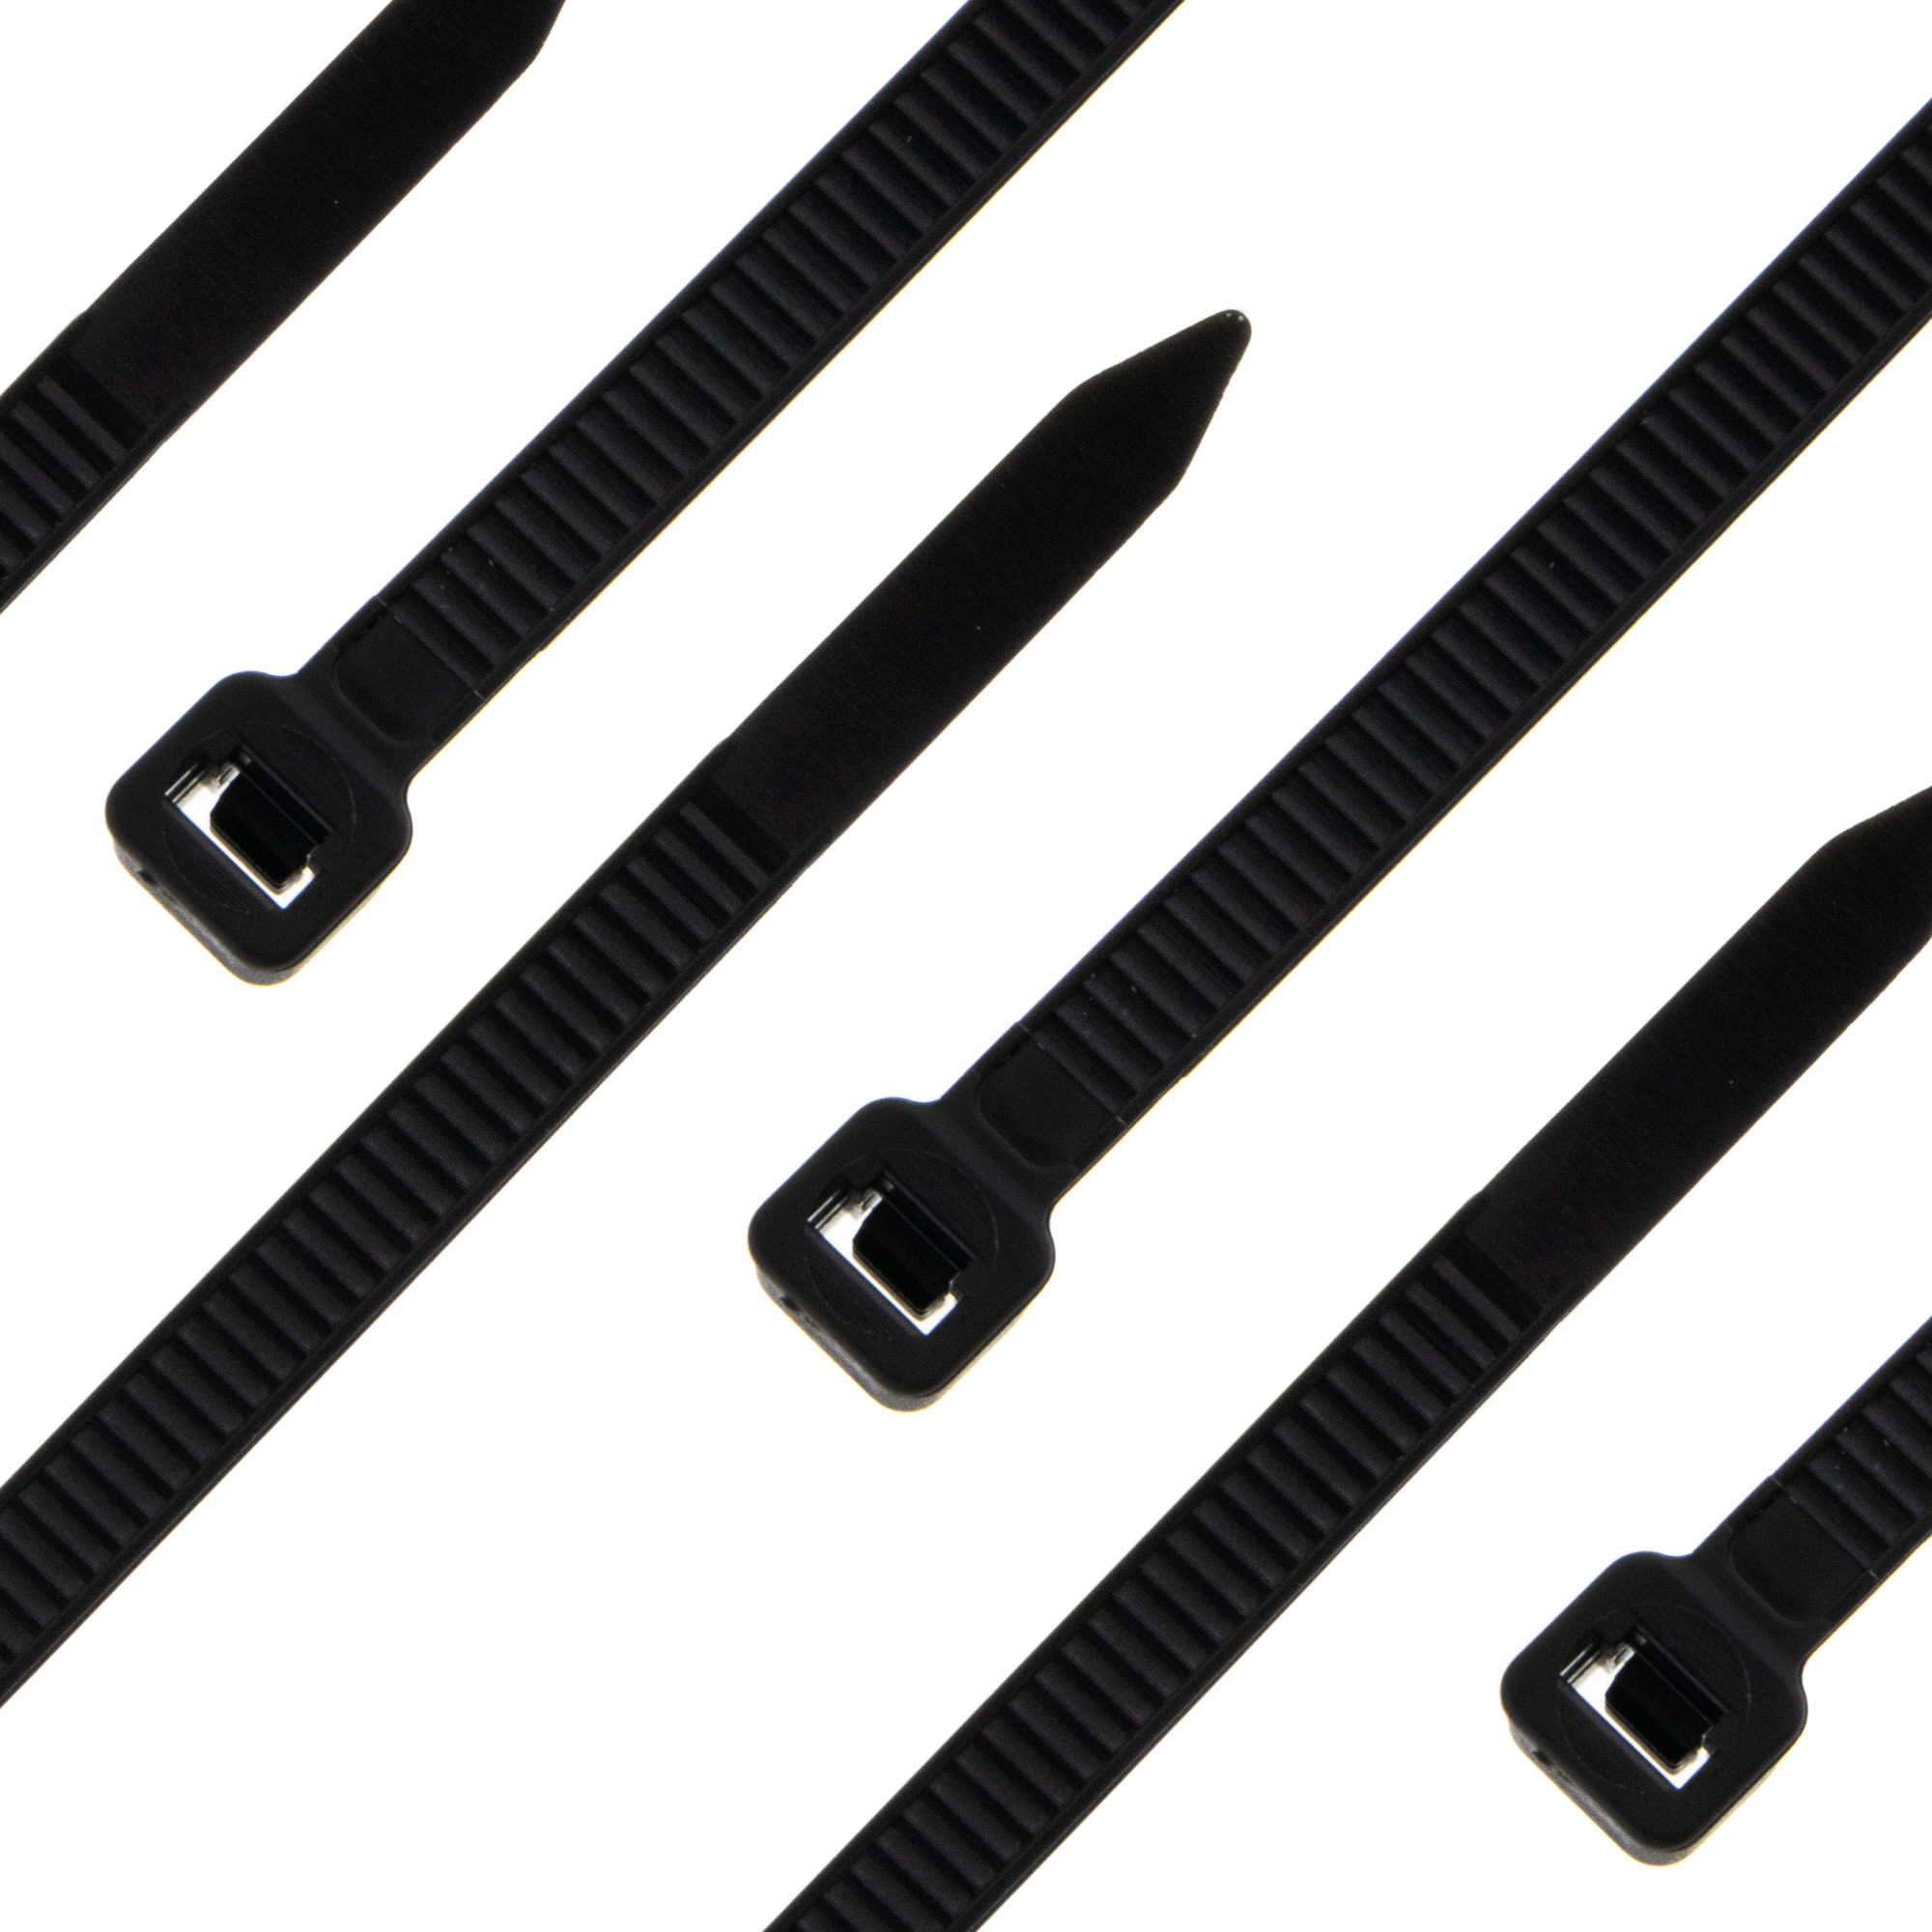 Cable tie self-locking 200 x 2,5mm, black, 100PCS